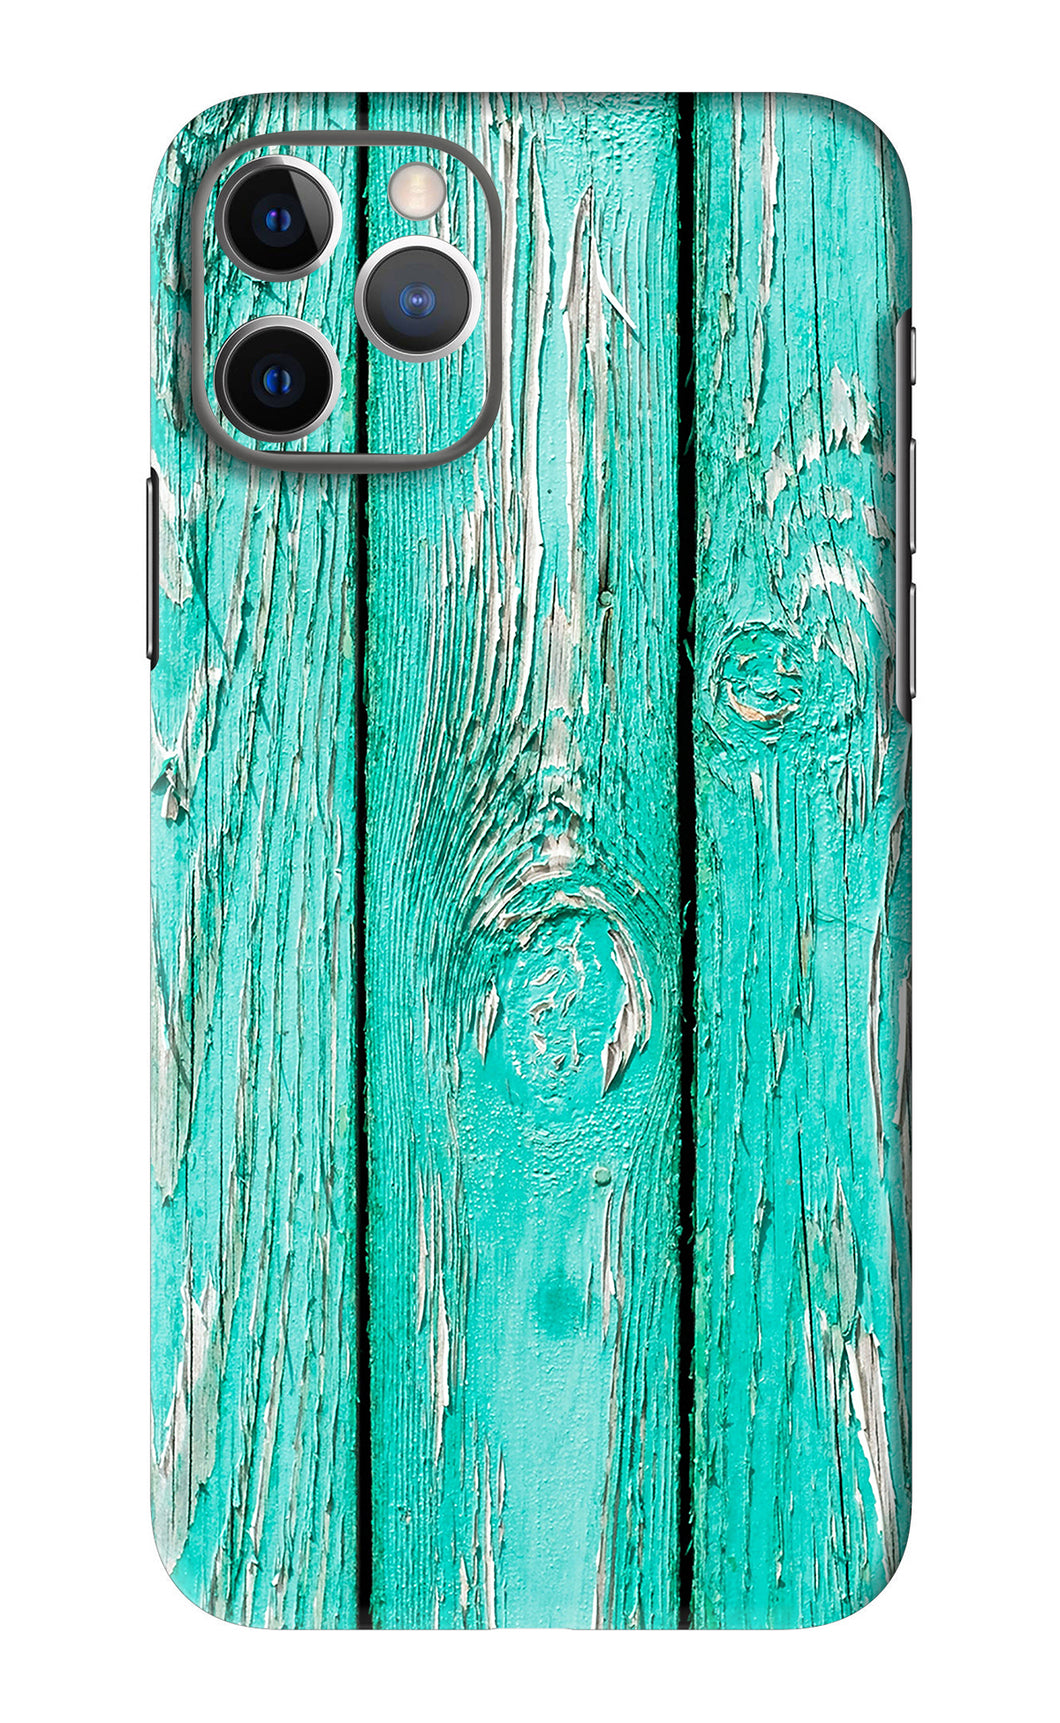 Blue Wood iPhone 11 Pro Max Back Skin Wrap